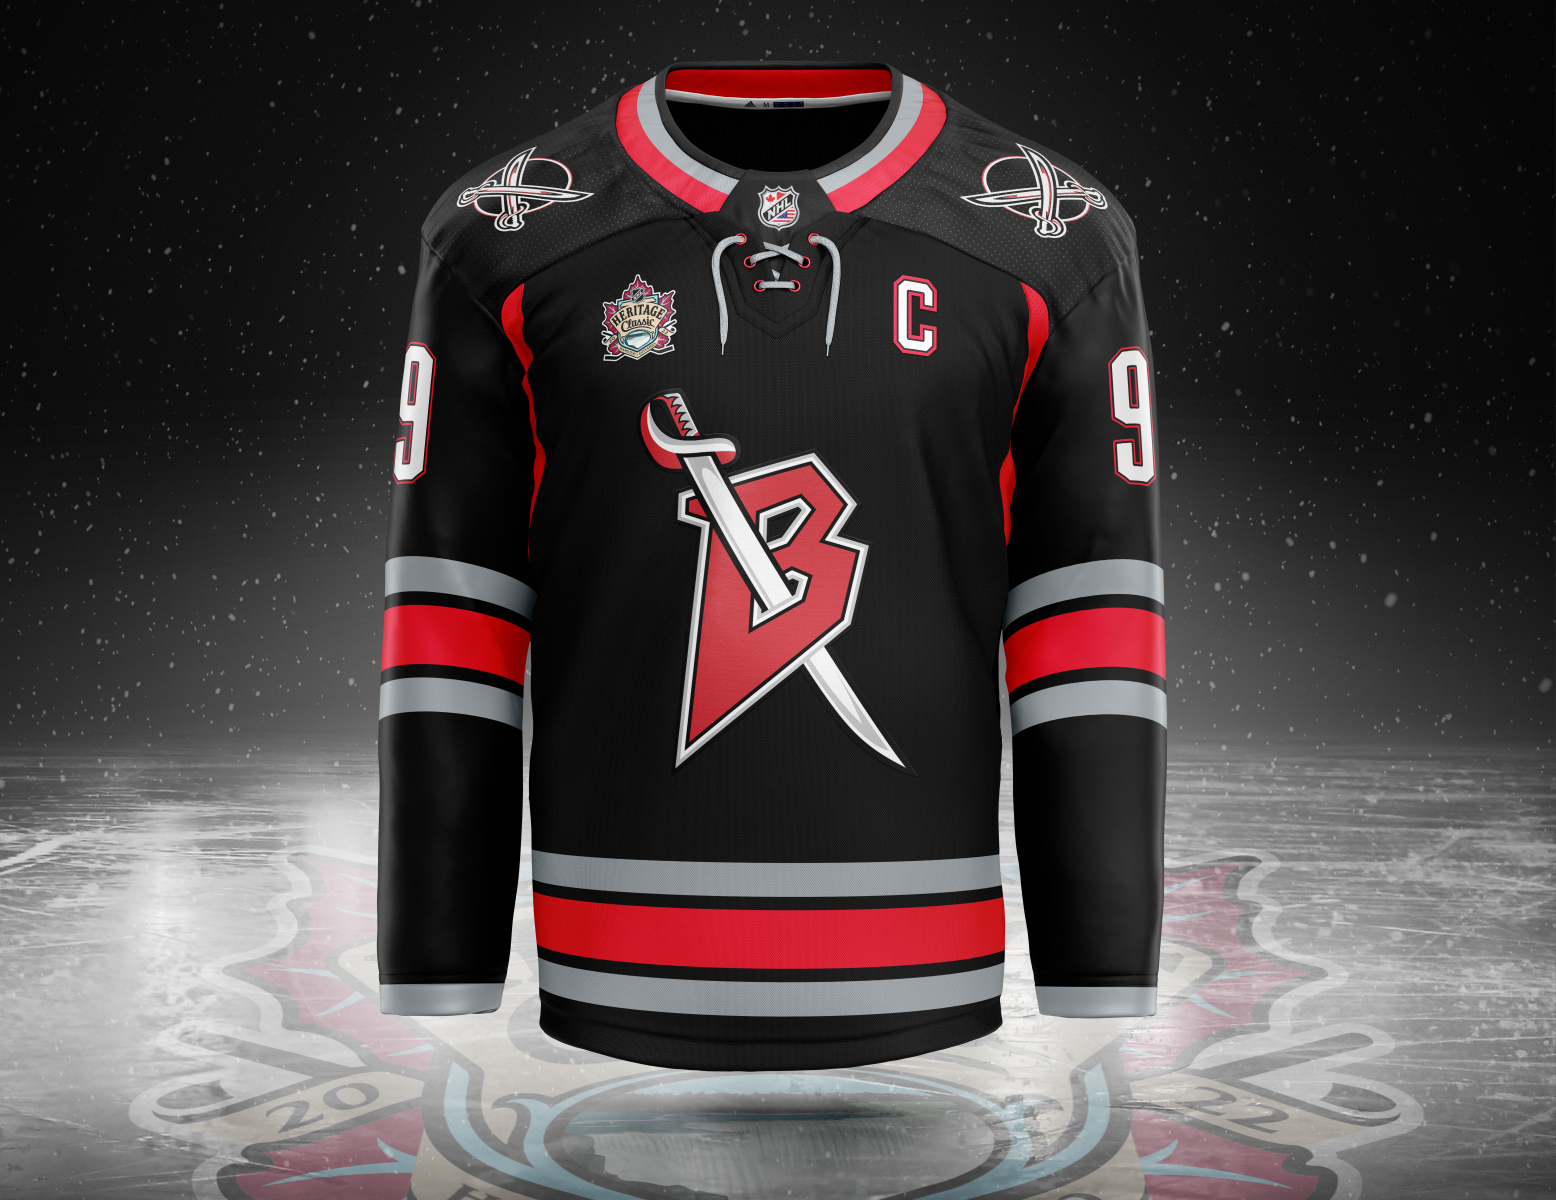 Buffalo Sabres Heritage Classic concept jerseys : r/hockeydesign